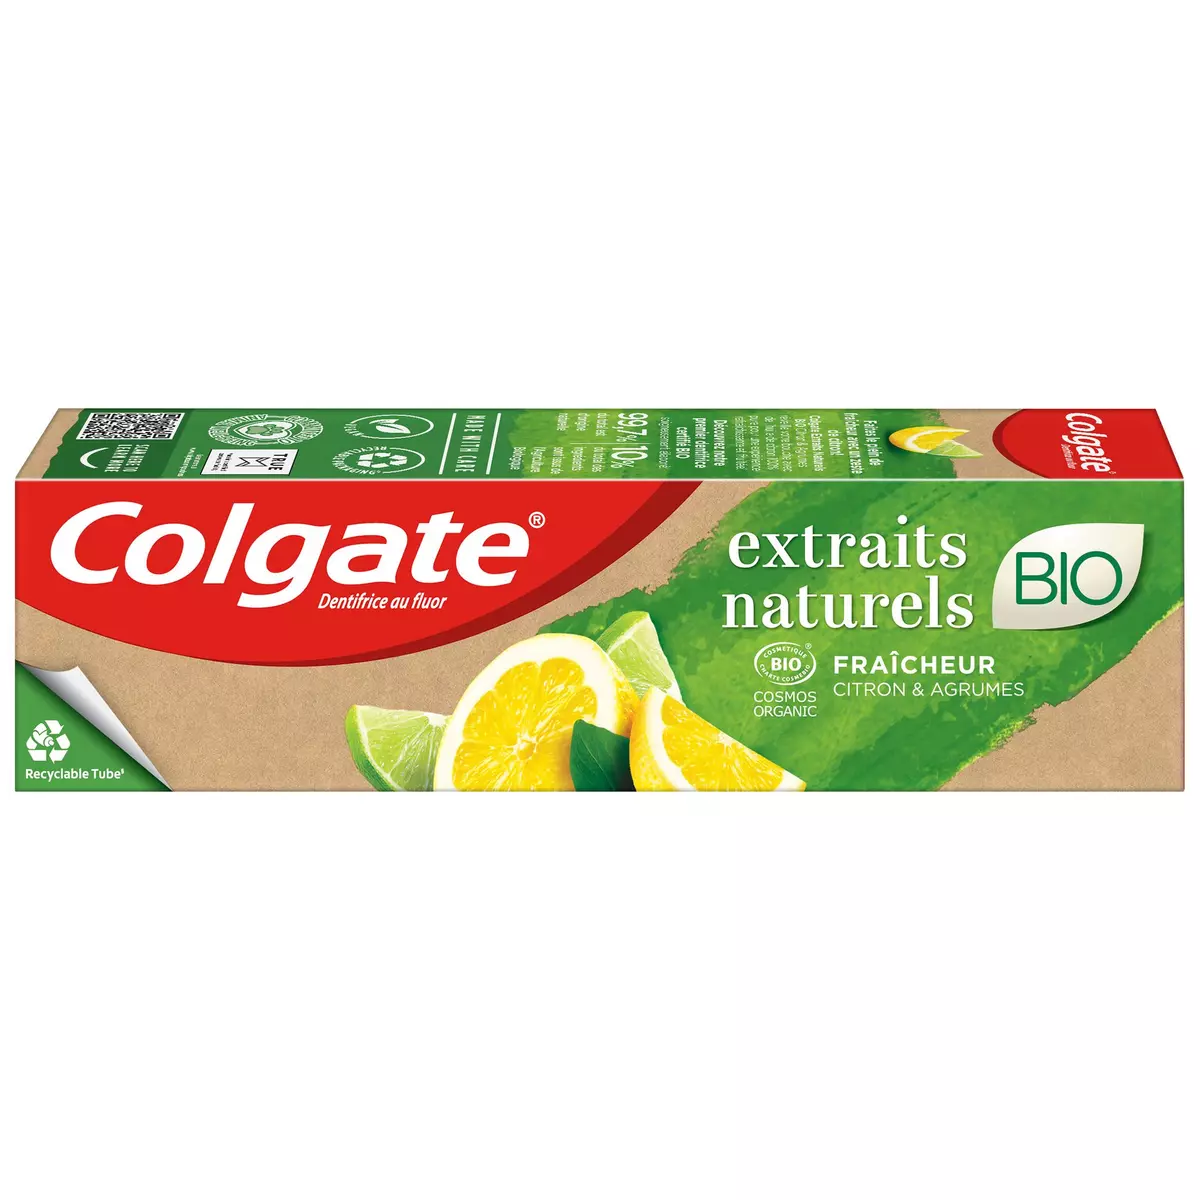 COLGATE Dentifrice bio extraits naturels fraicheur citron et agrumes 75ml